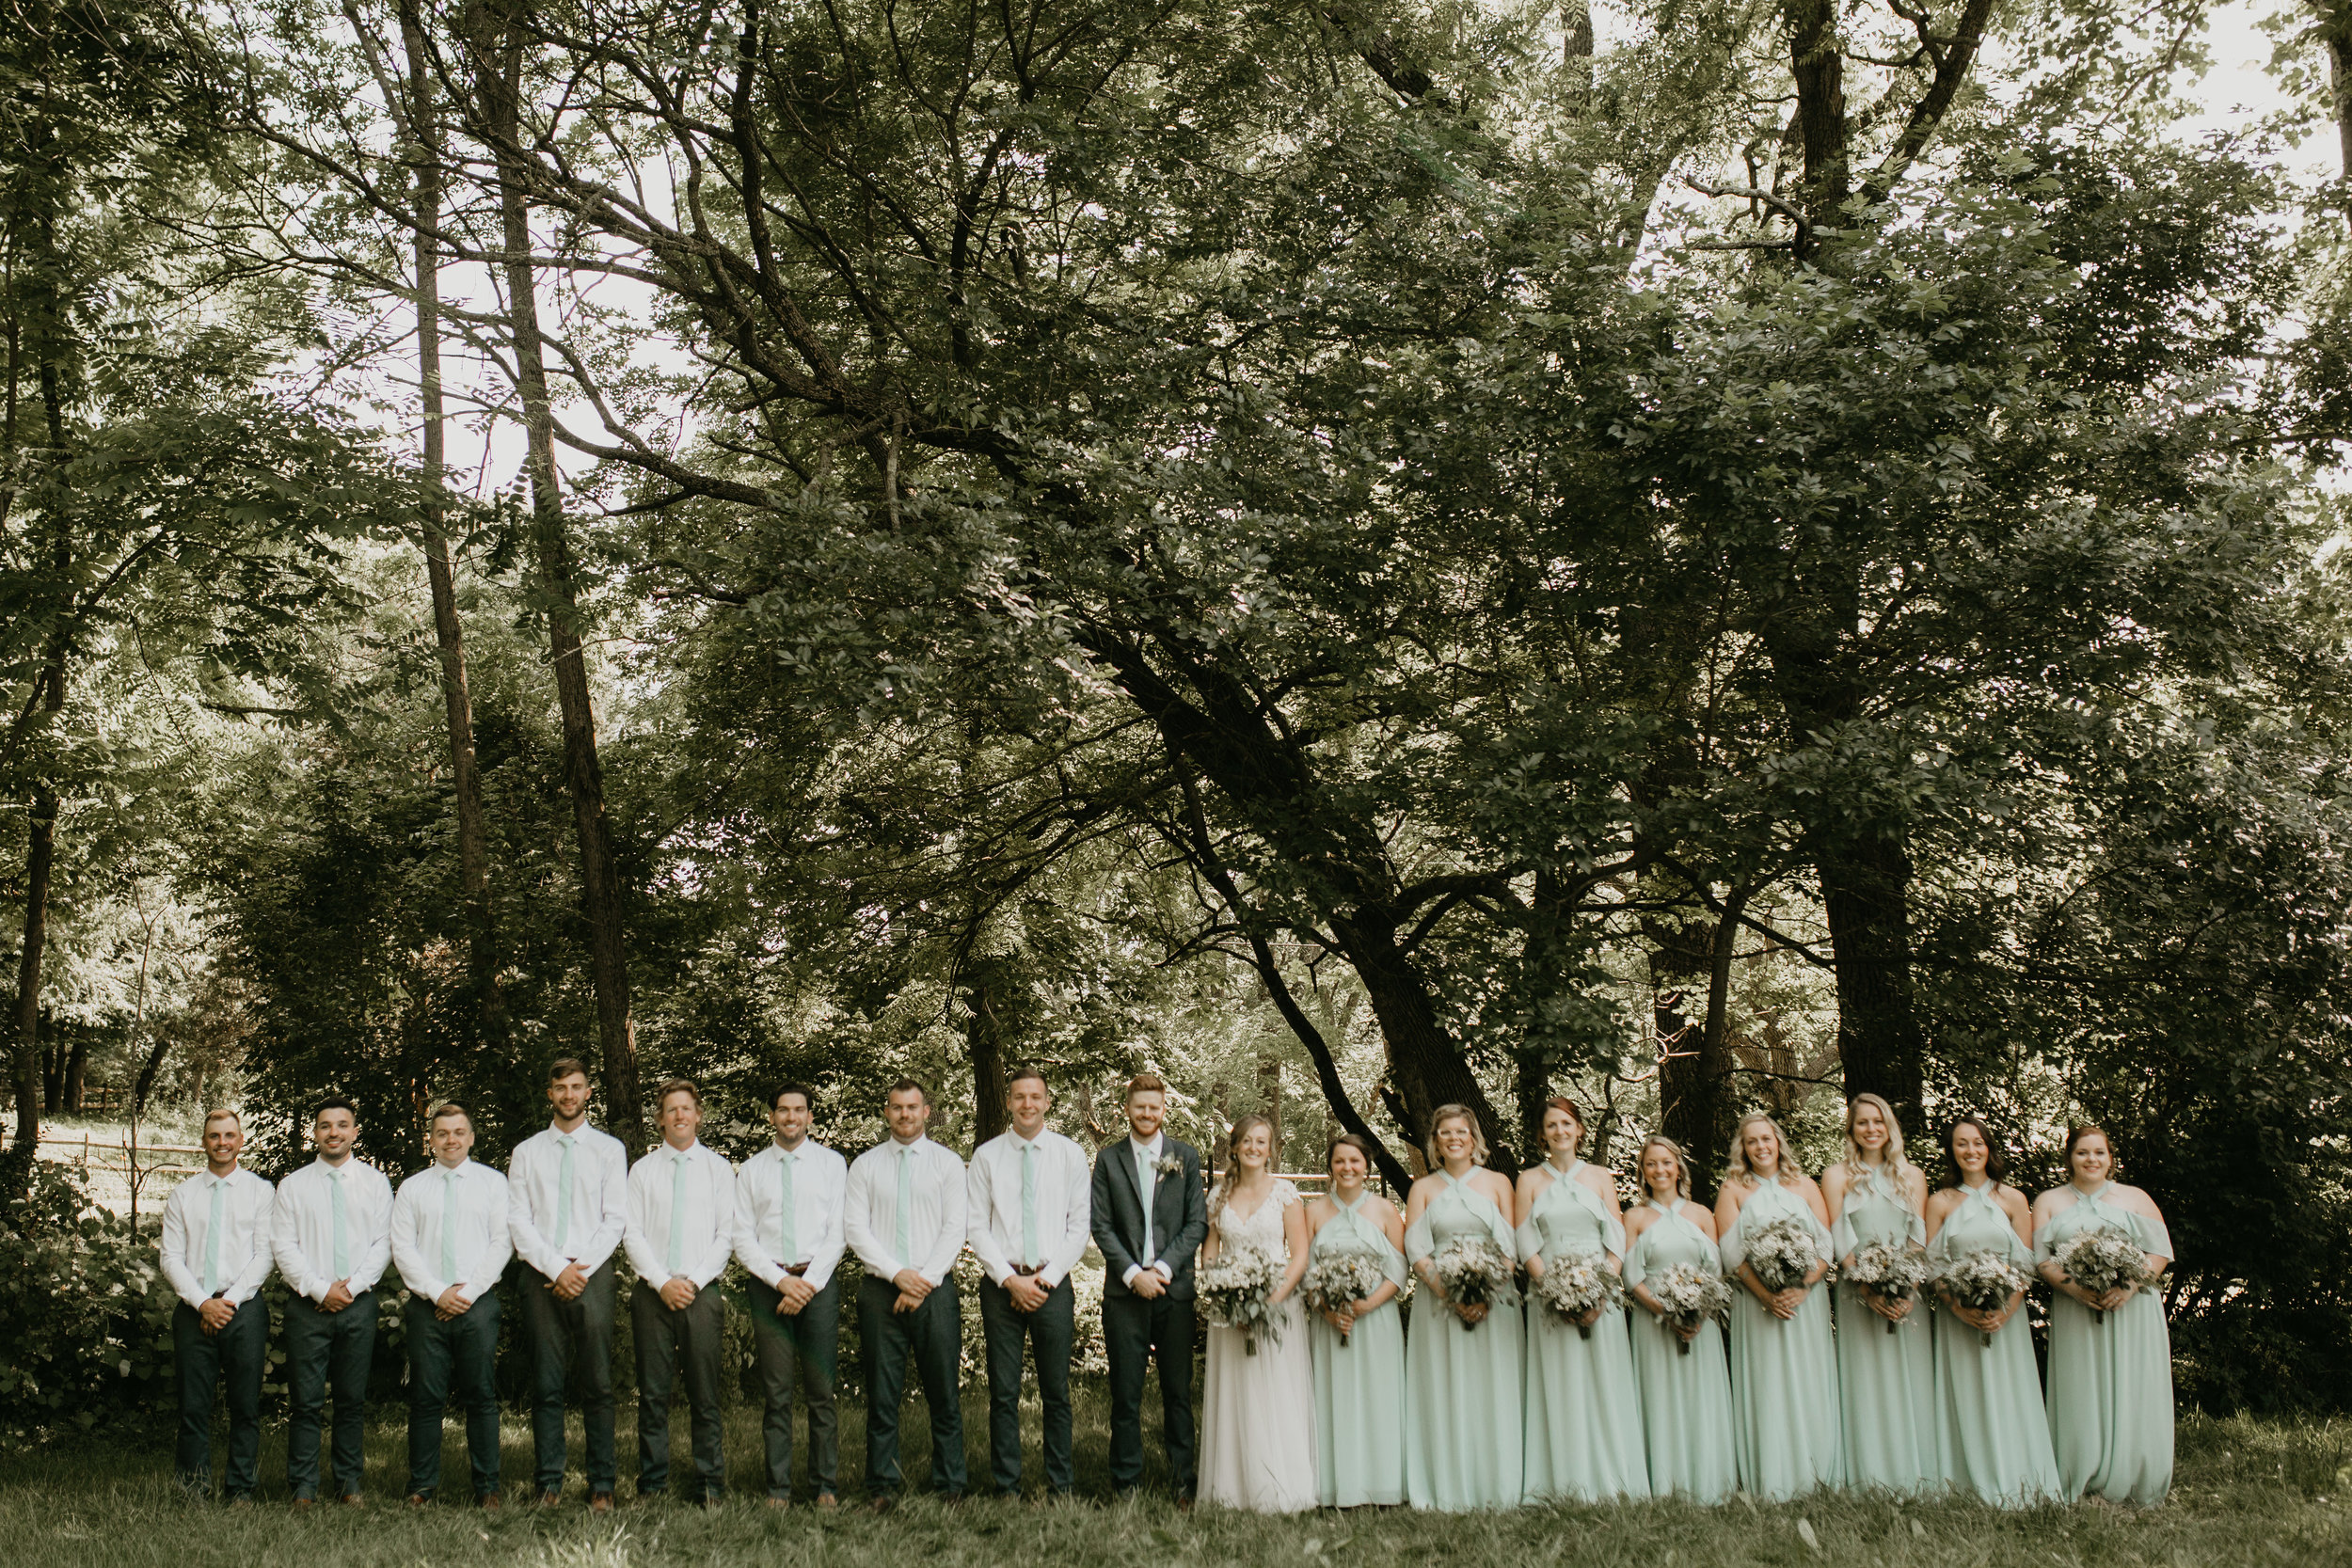 Nicole-Daacke-Photography-pennsylvania-laid-back-outside-backyard-wedding-family-summer-june-maryland-barefoot-bride-woodland-trees-sunset-couple-30.jpg